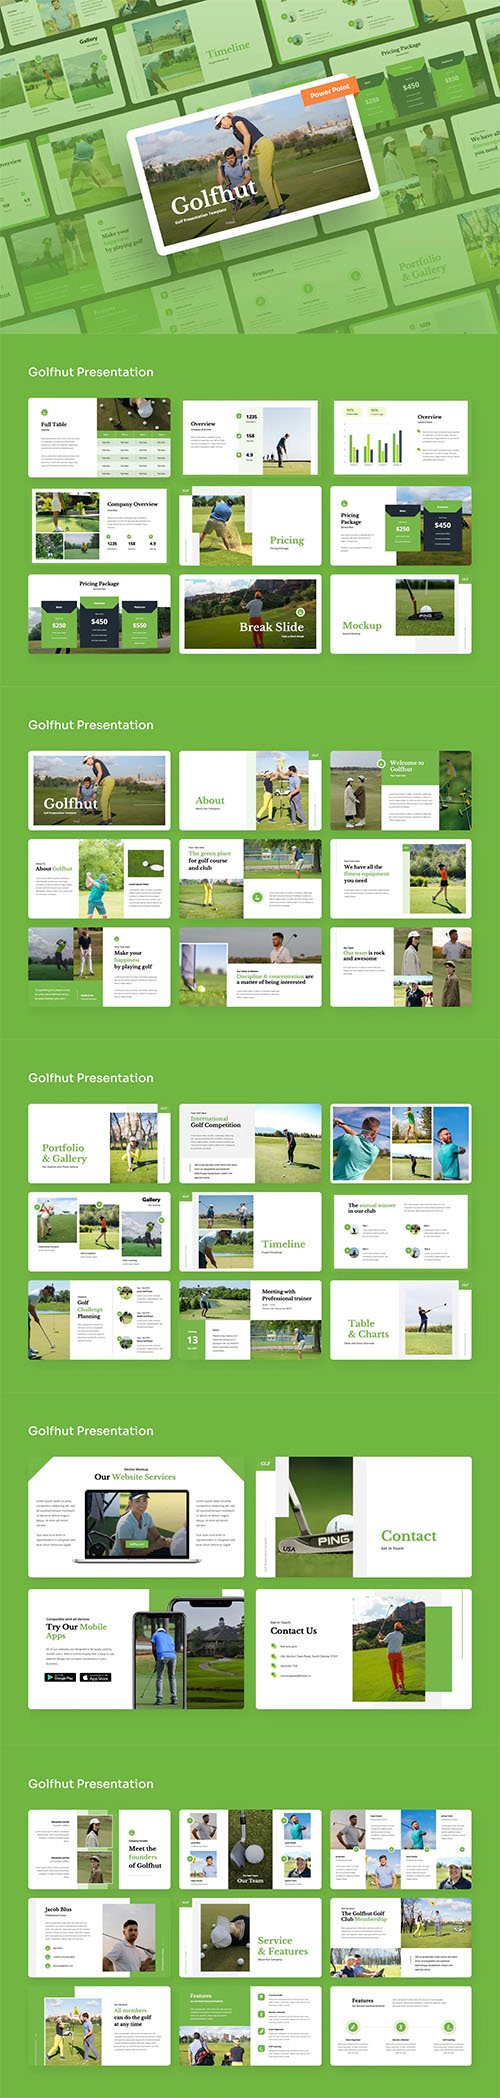 Golfhut - Golf Power Point Presentation